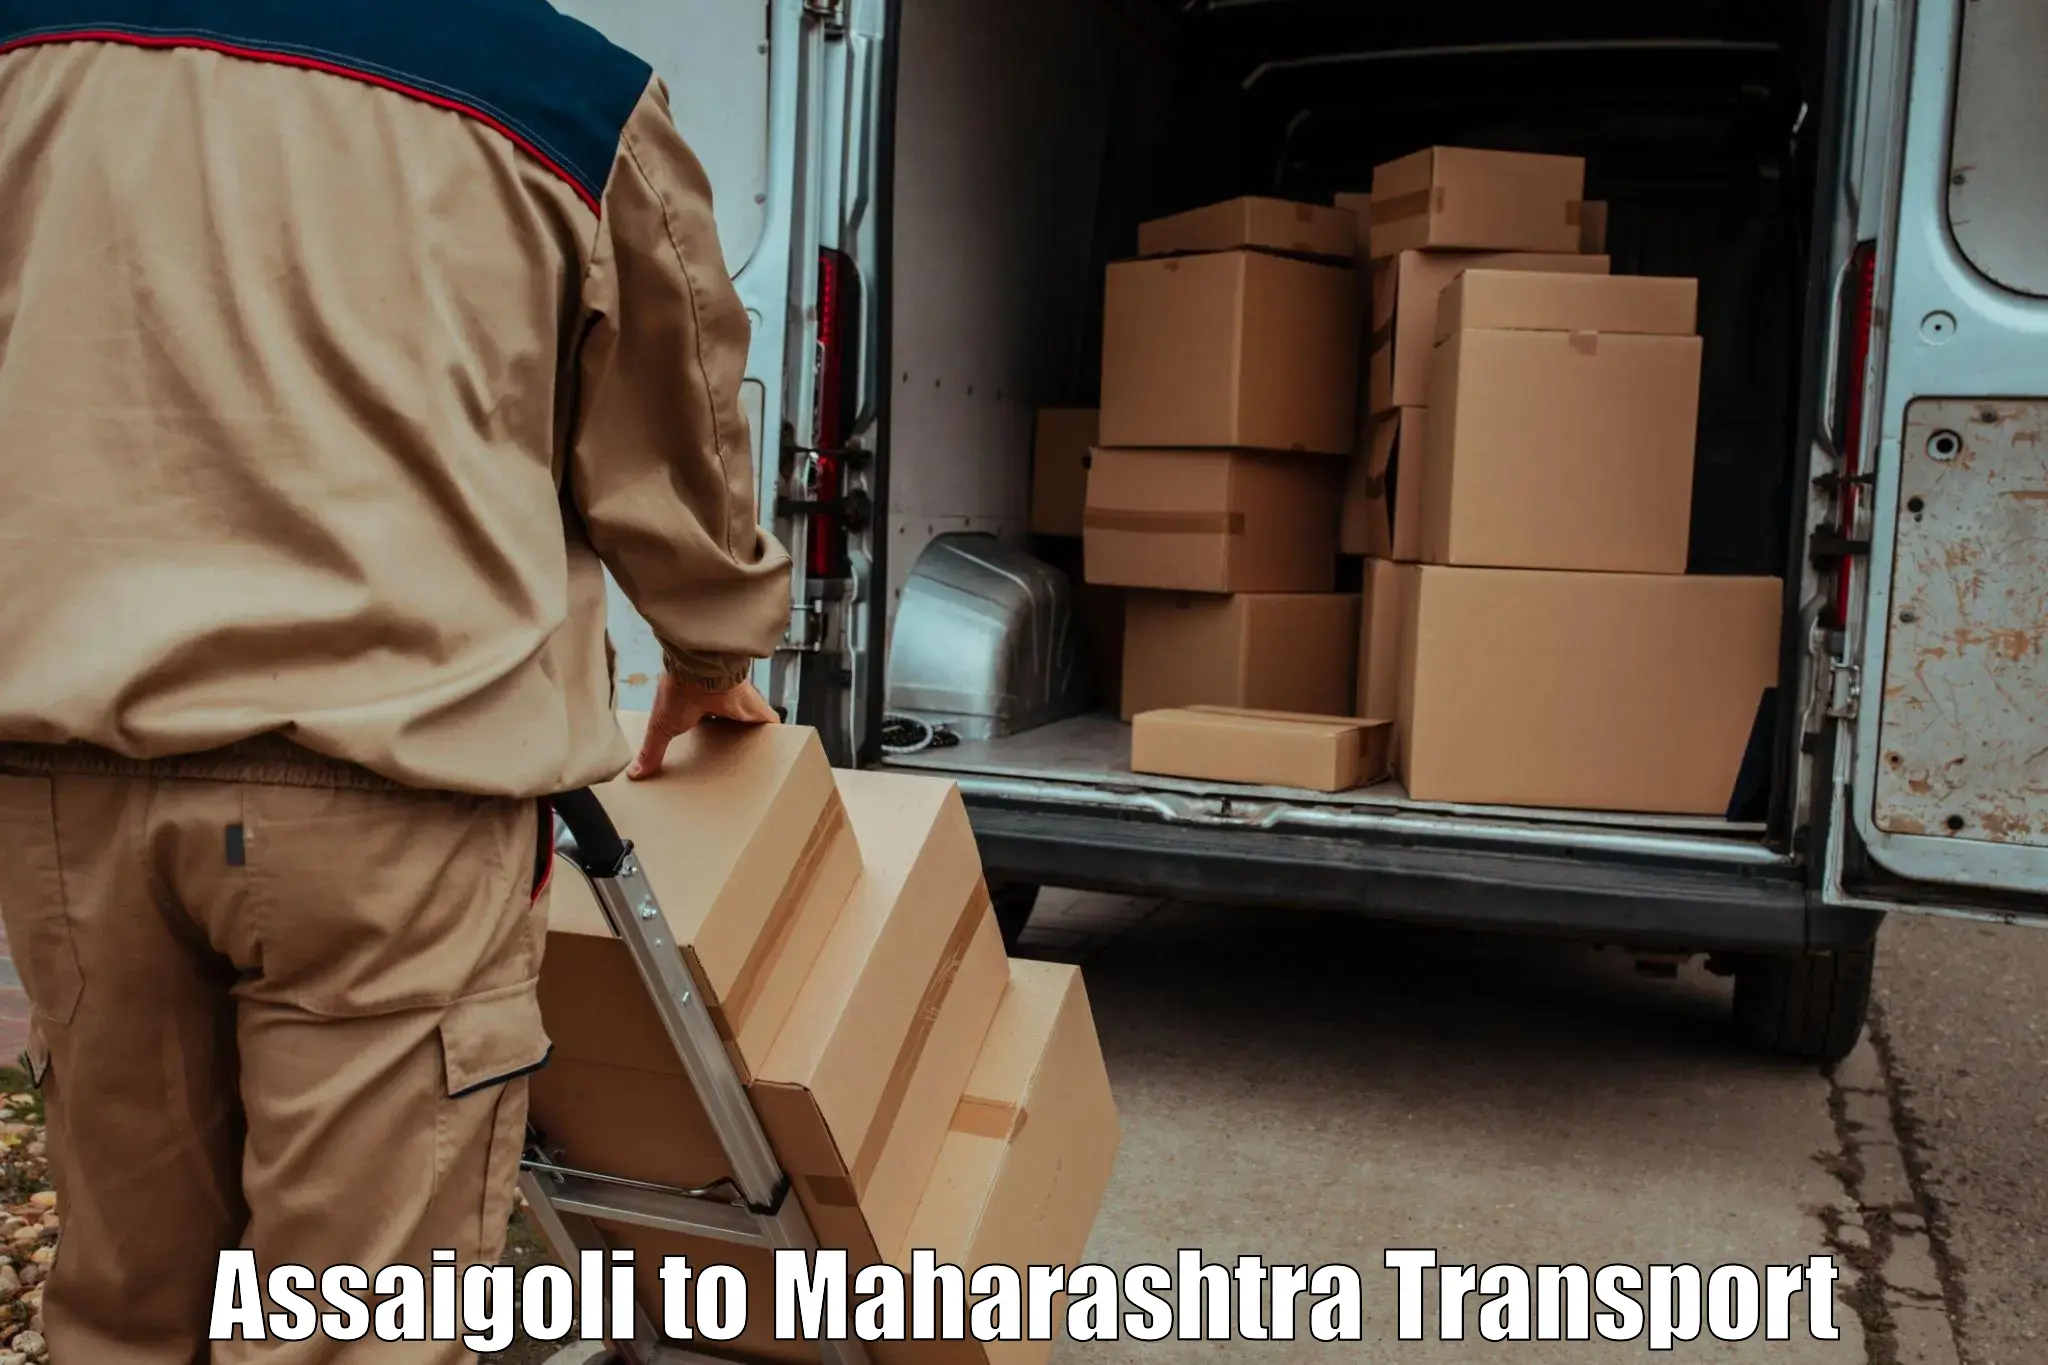 Luggage transport services Assaigoli to Tata Institute of Social Sciences Mumbai